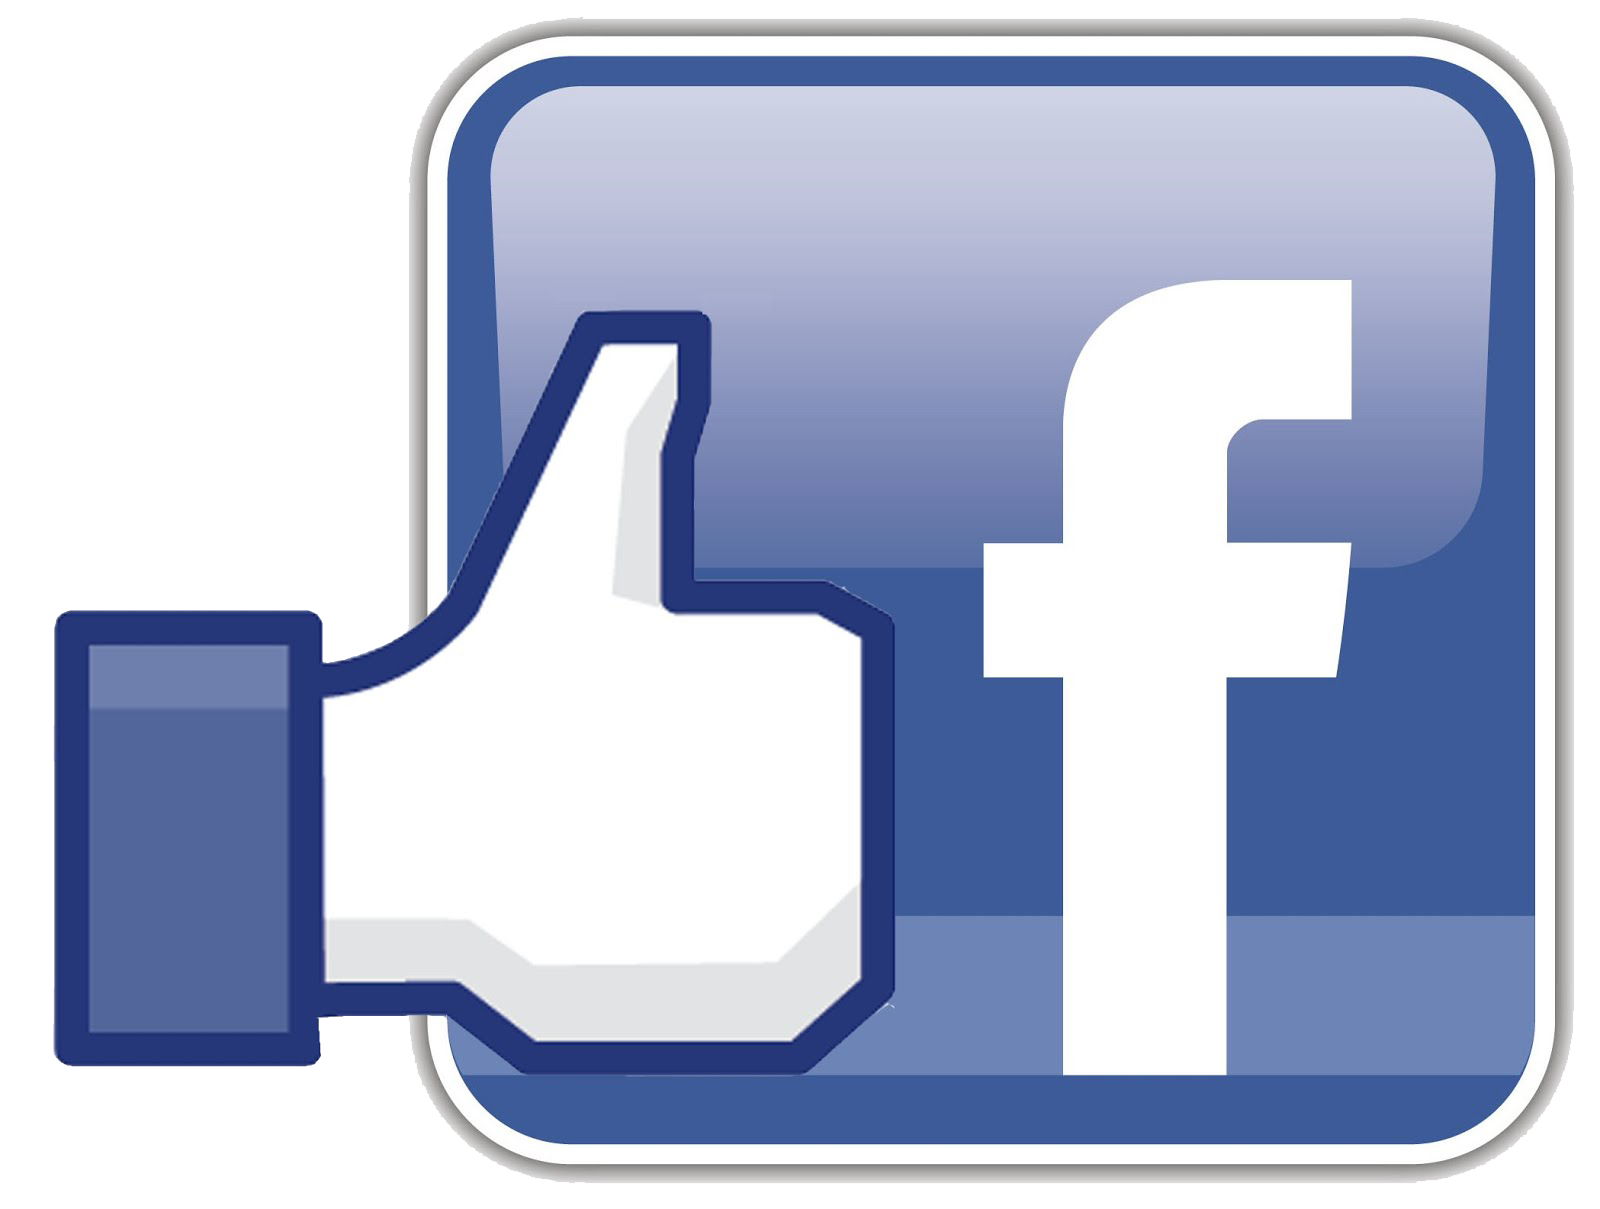 Facebook Icon - iOS 7 Style Social Media Icons 